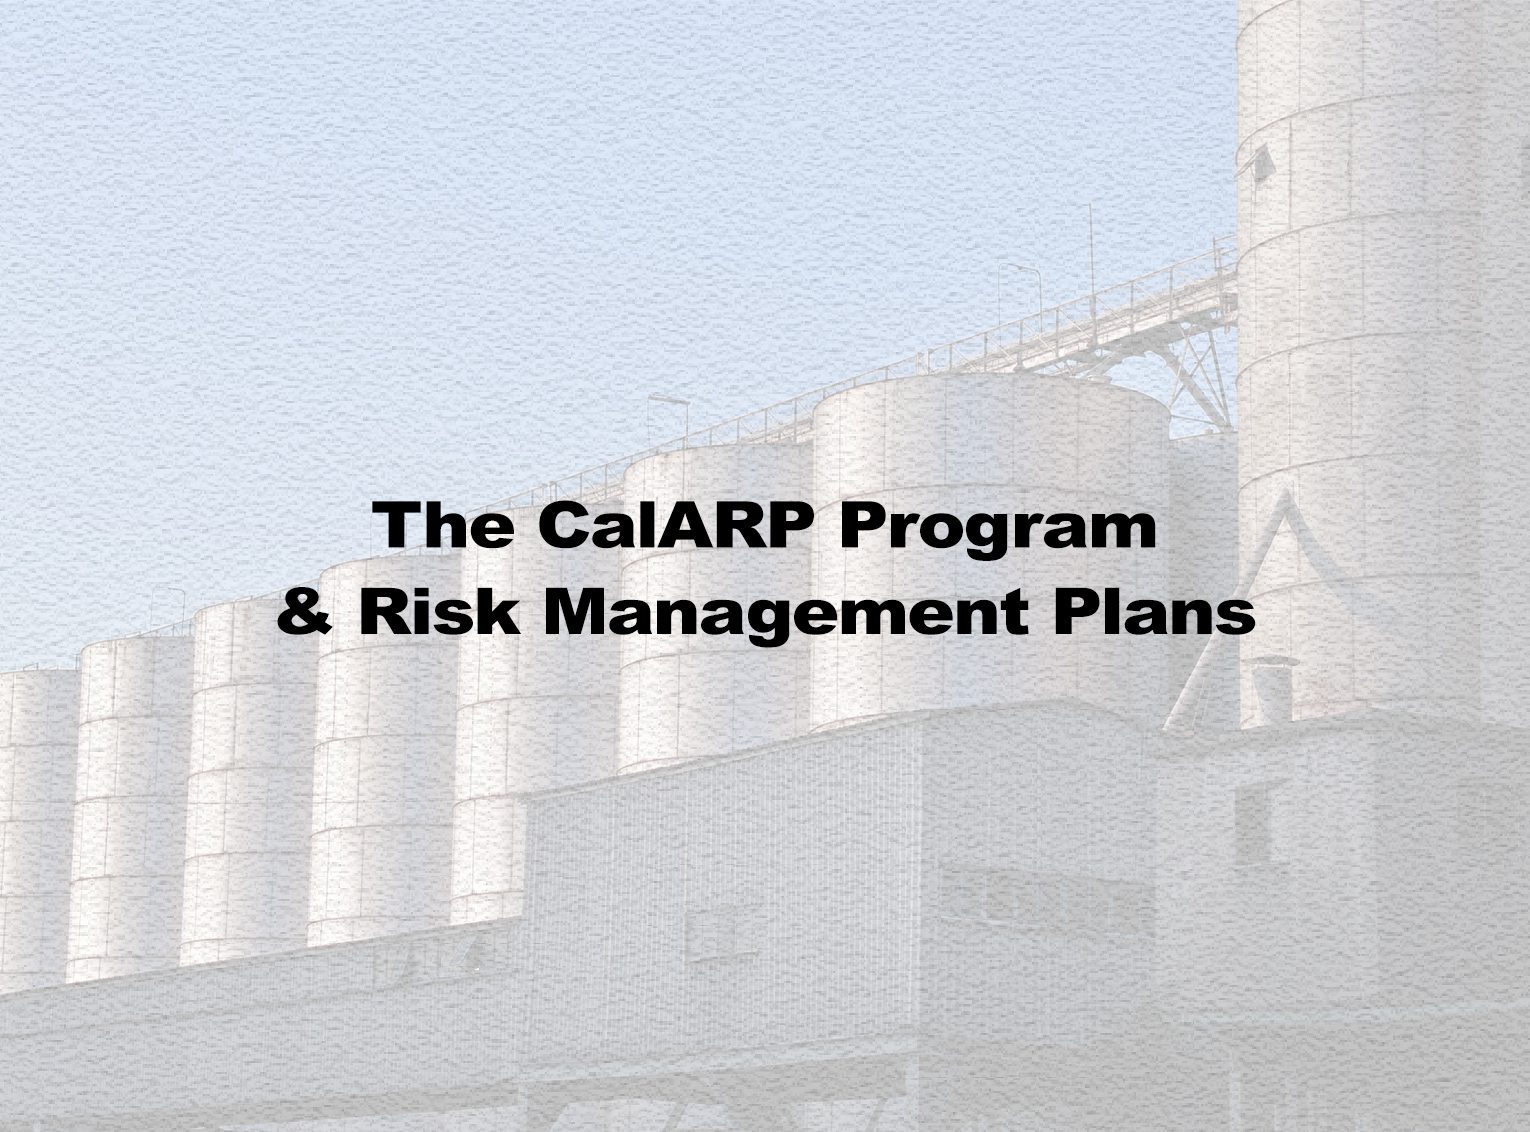 The CalARP Program & Risk Management Plans